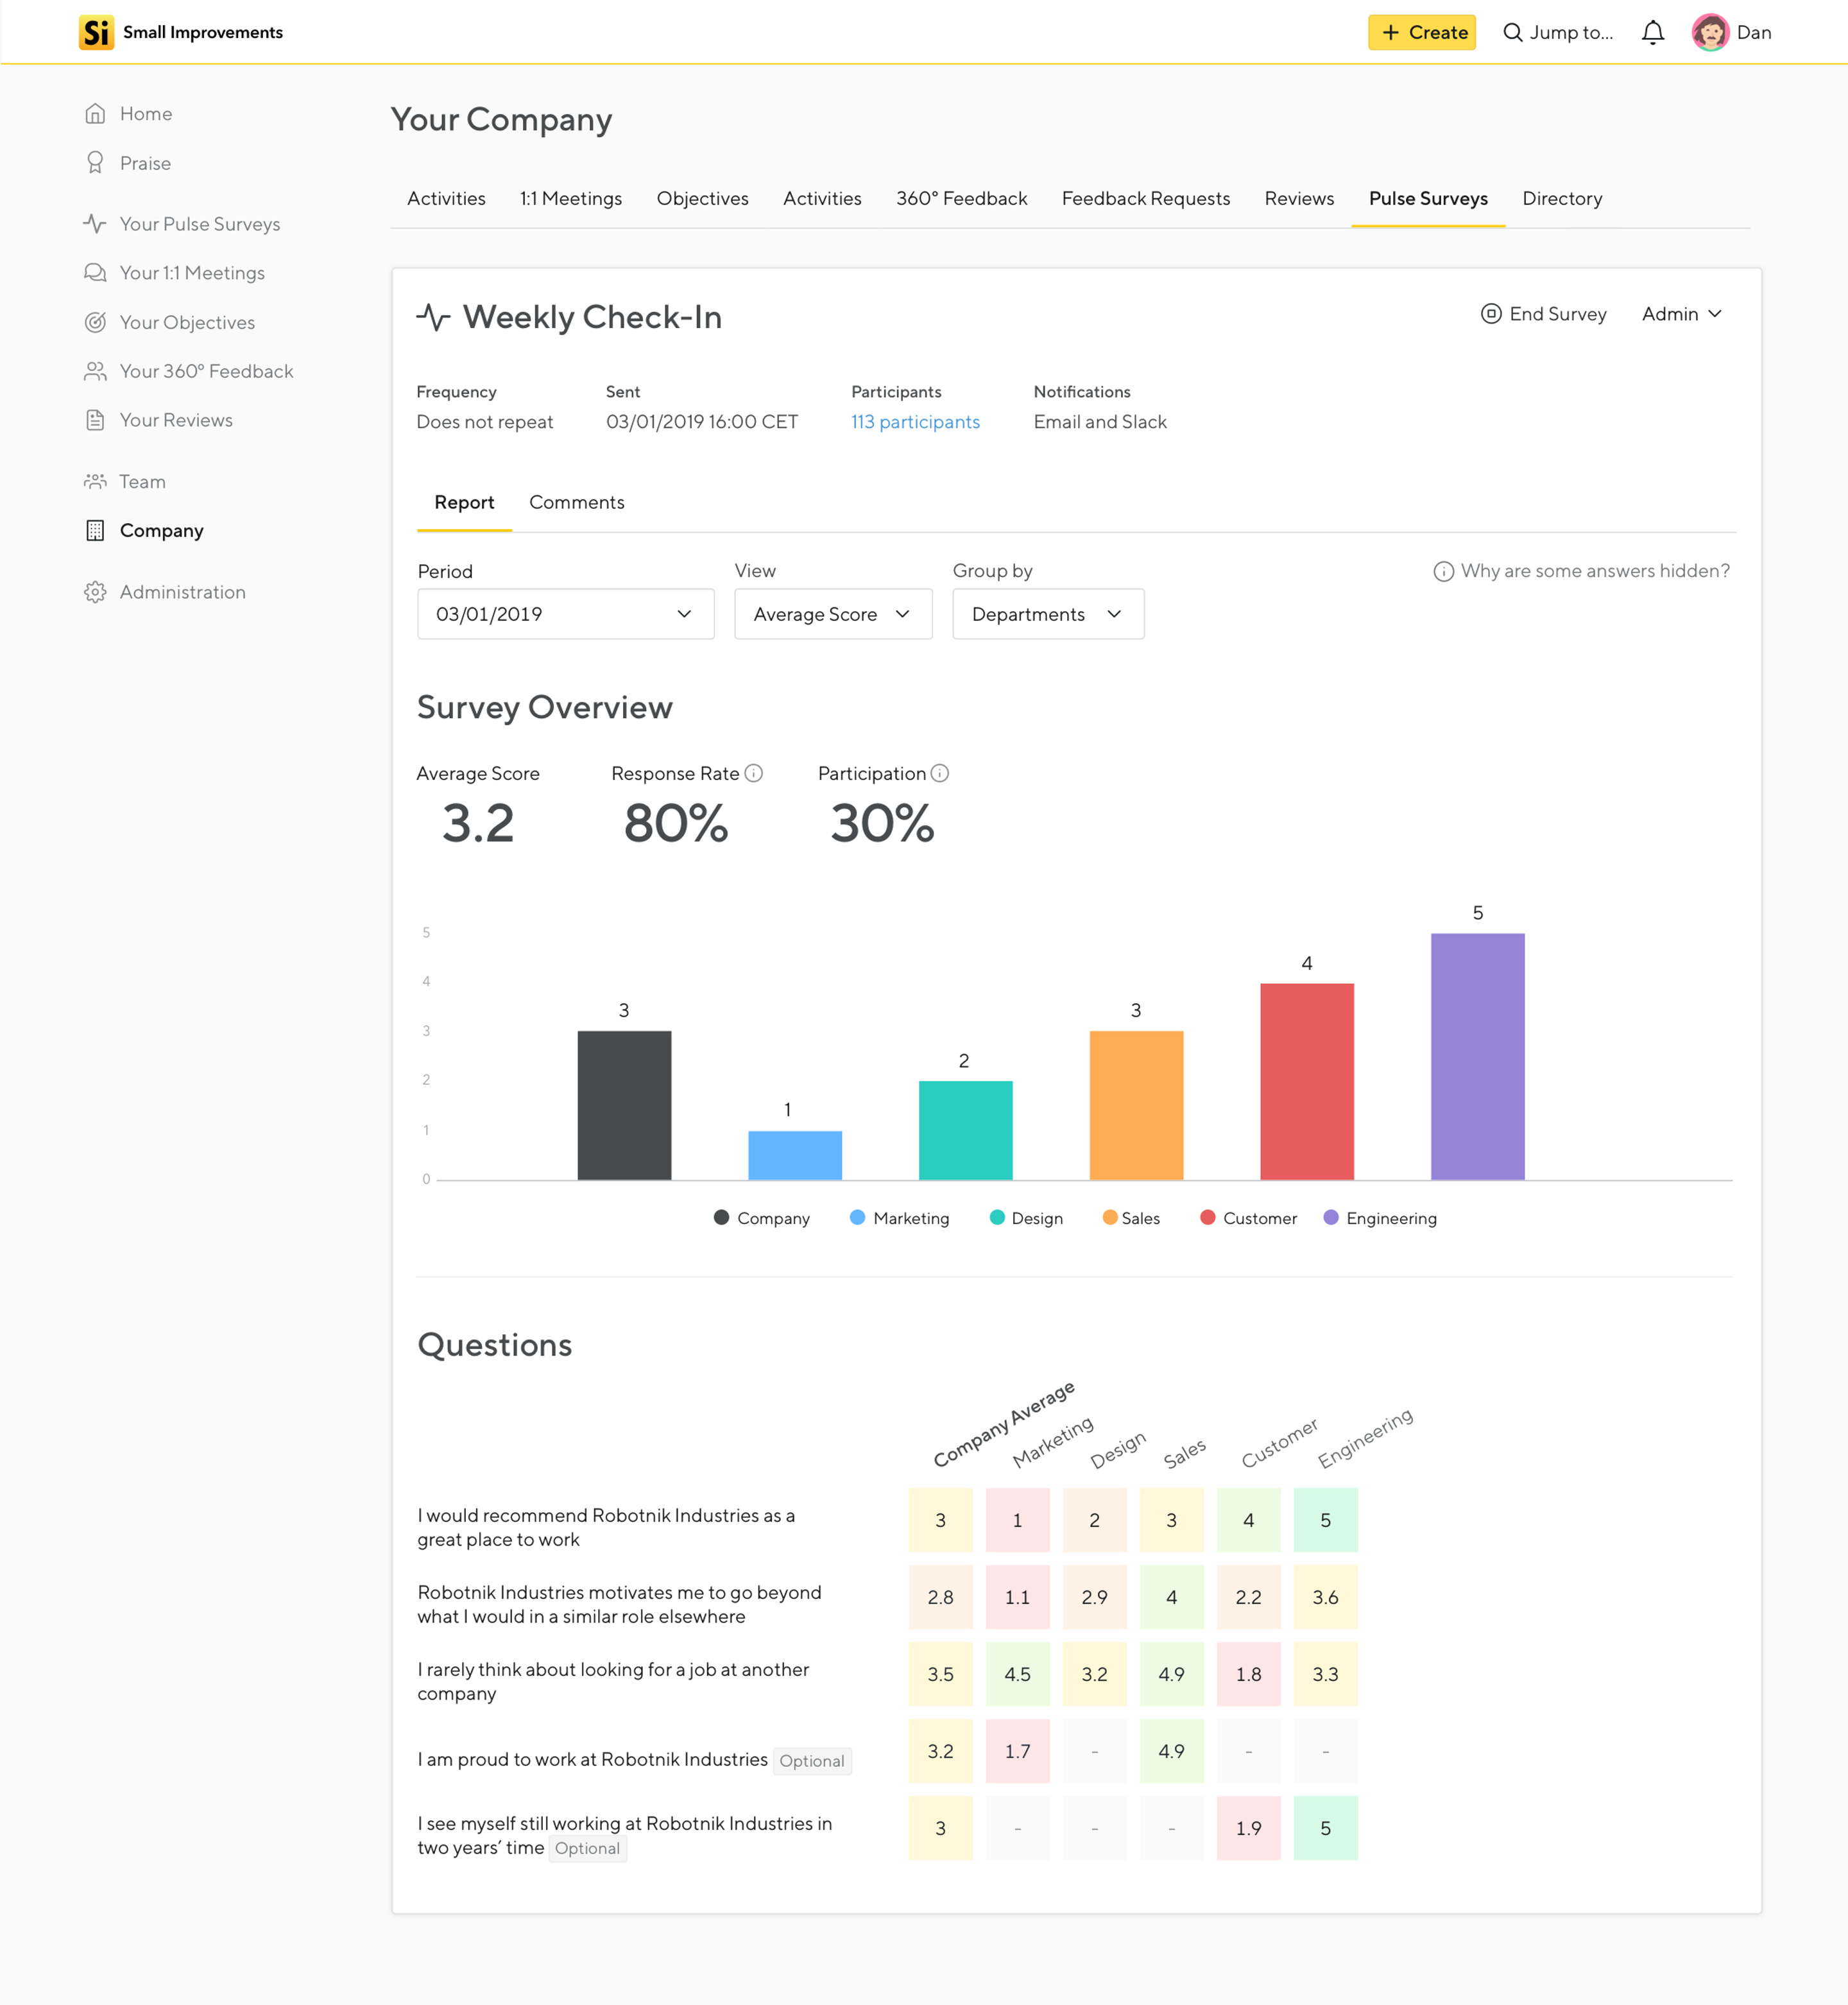 Survey Dashboard Screenshot showing the data for a single survey